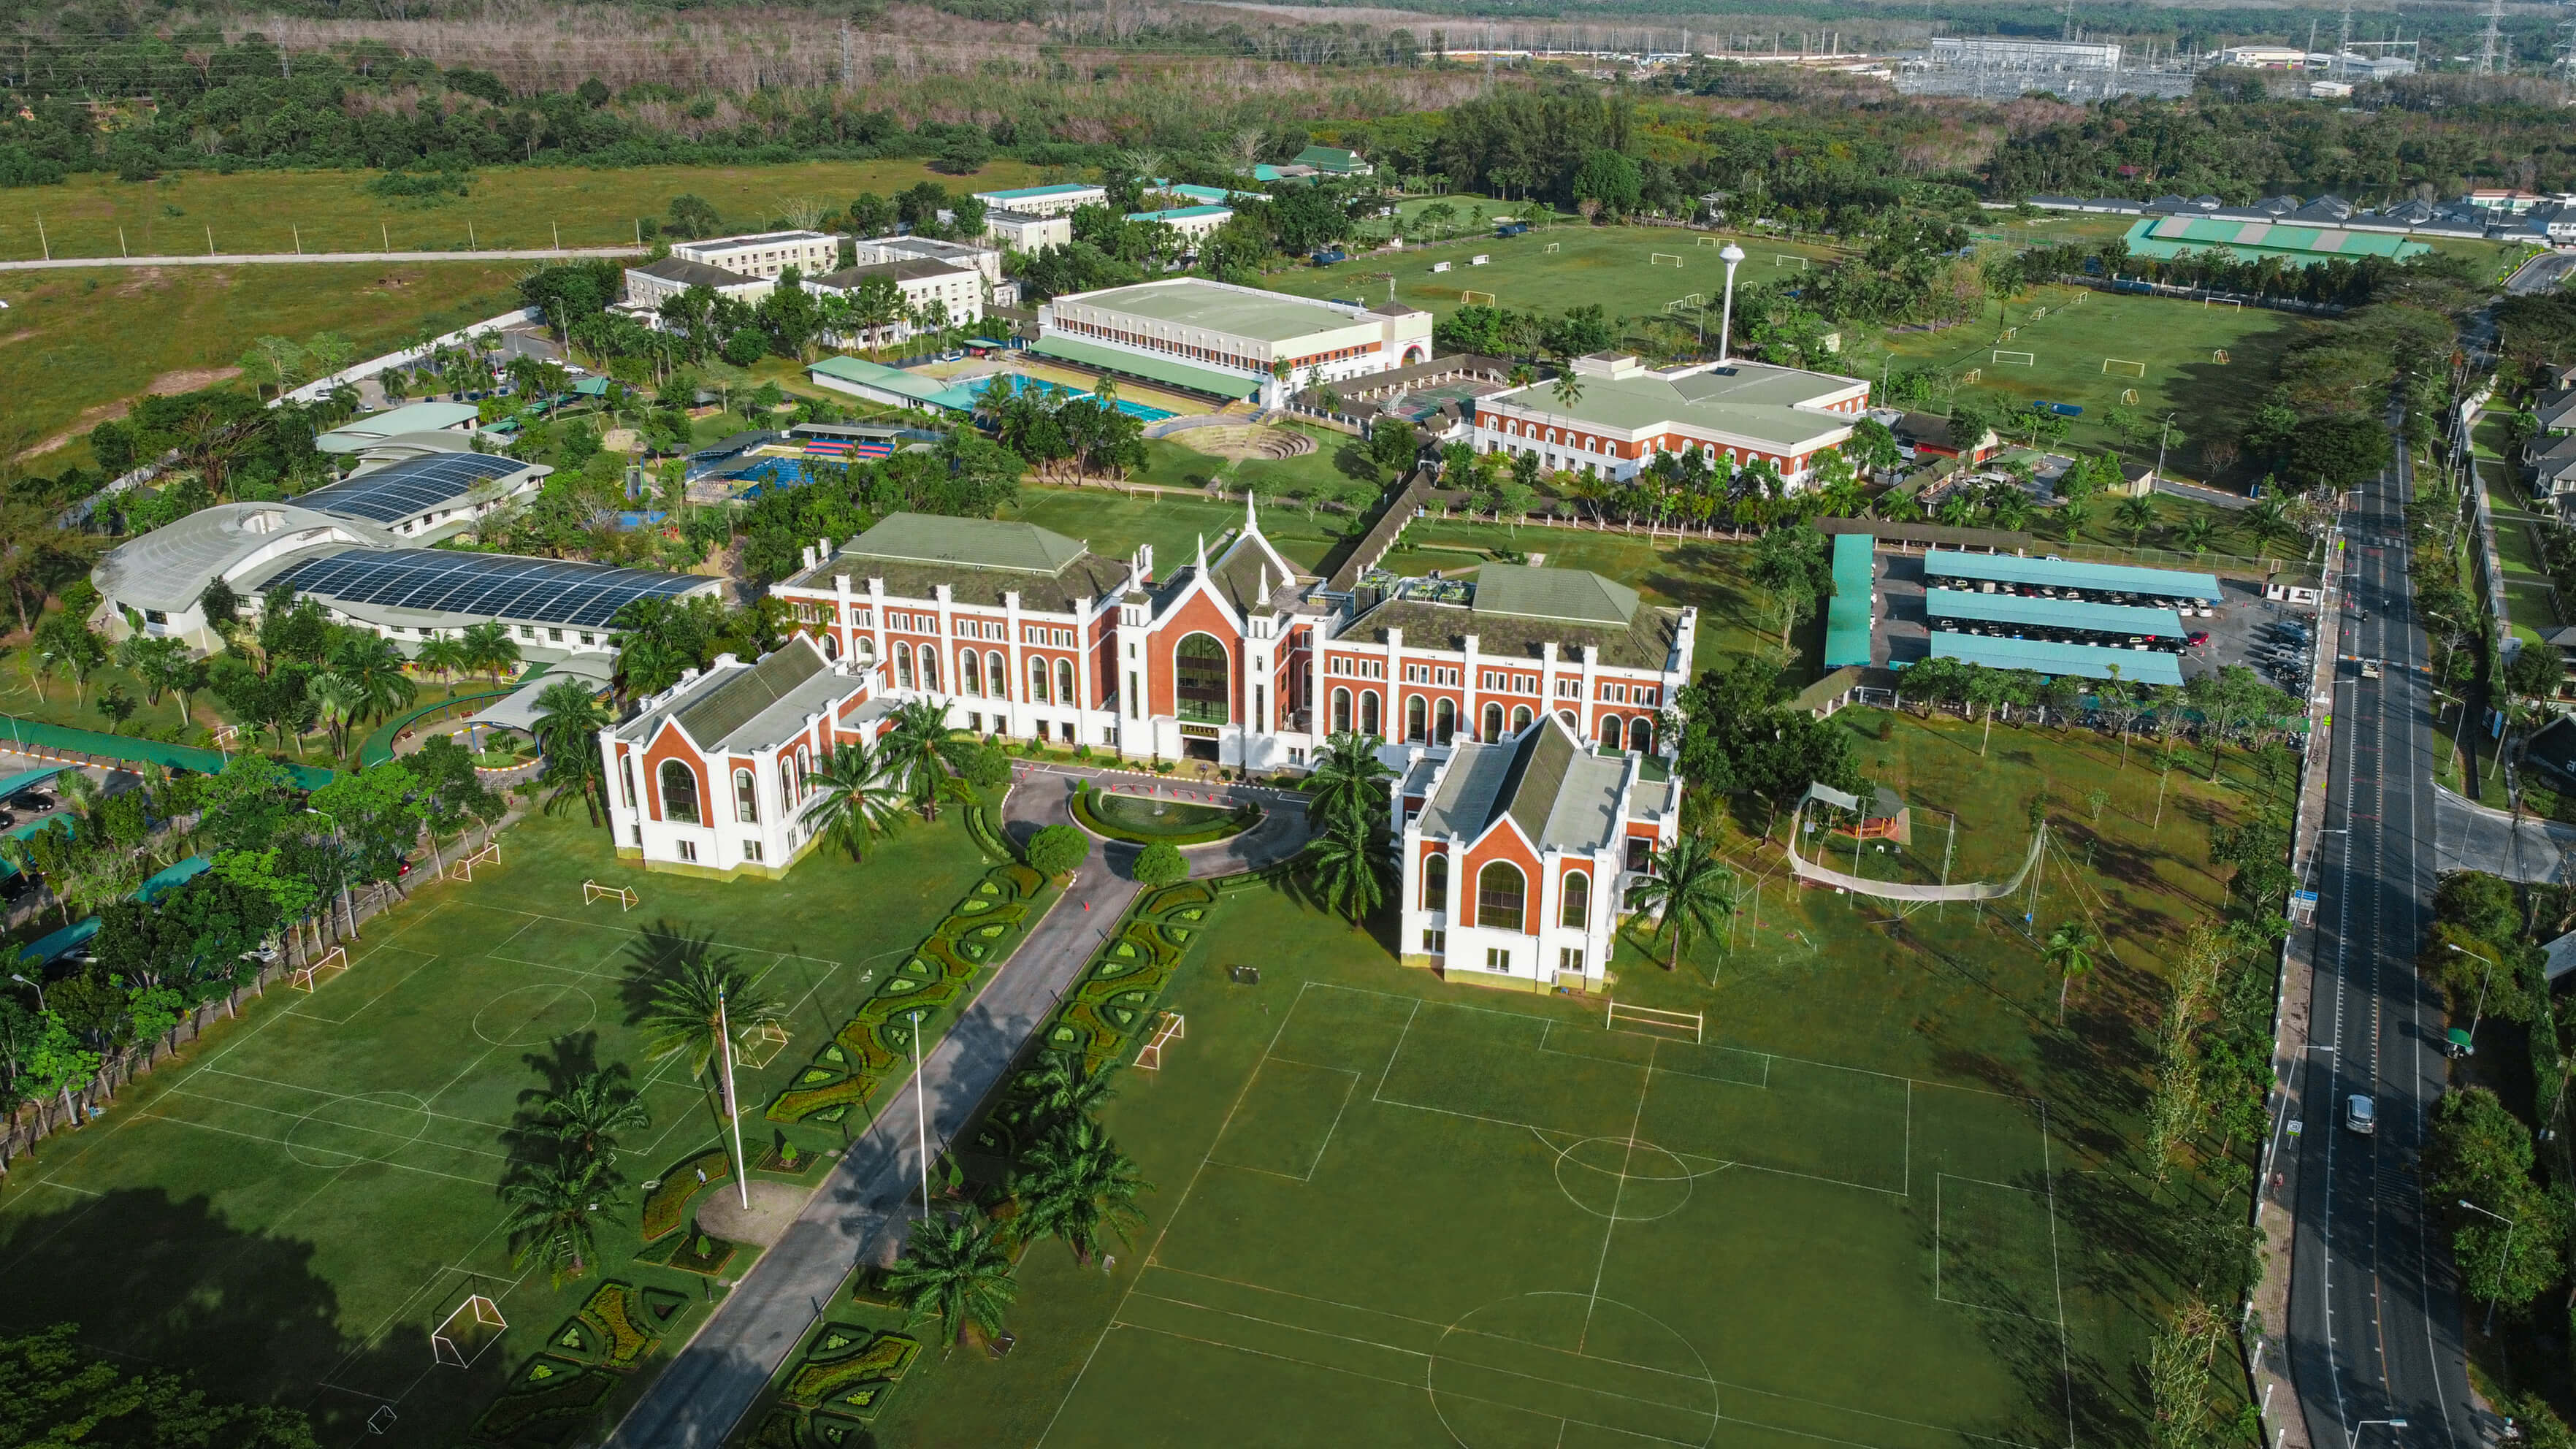 British International School, Phuket: An education in paradise